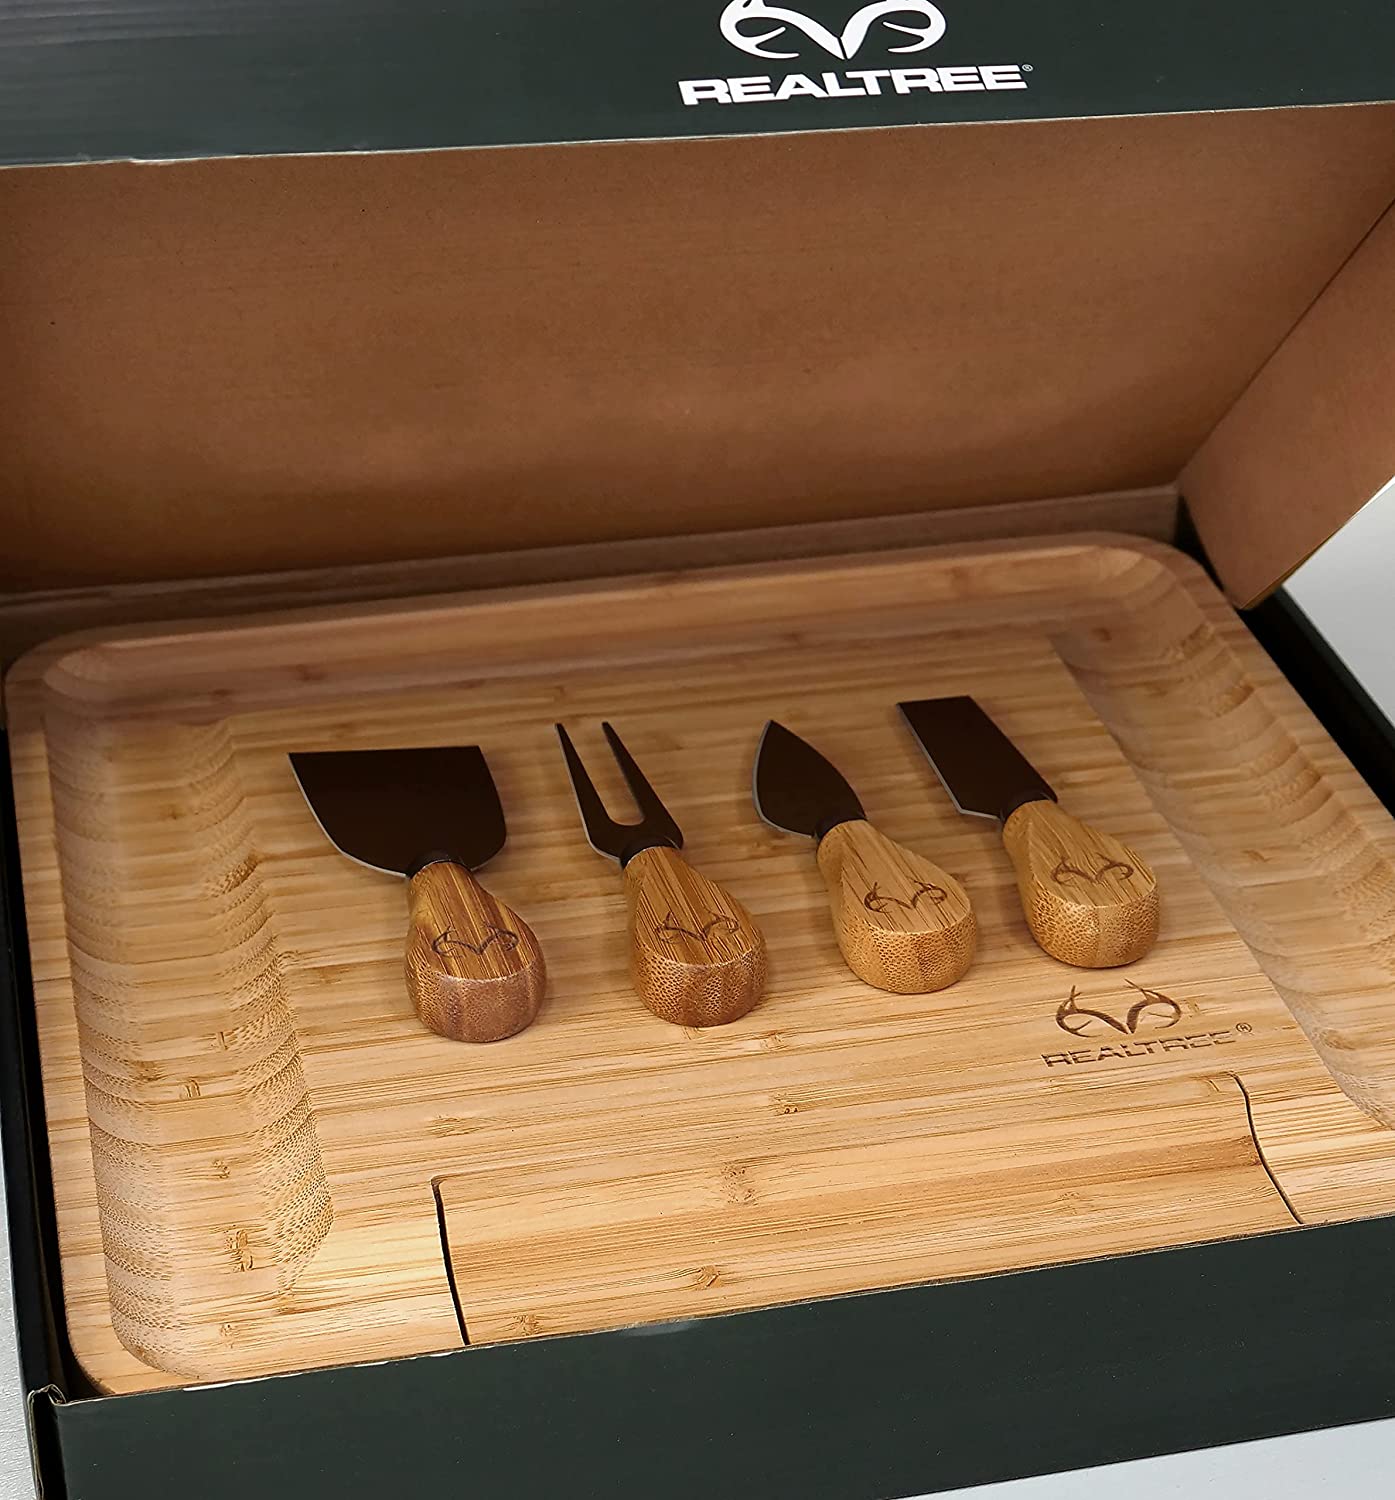 49017 - Realtree Bamboo Charcuterie Cheese Board & Knife Set USA